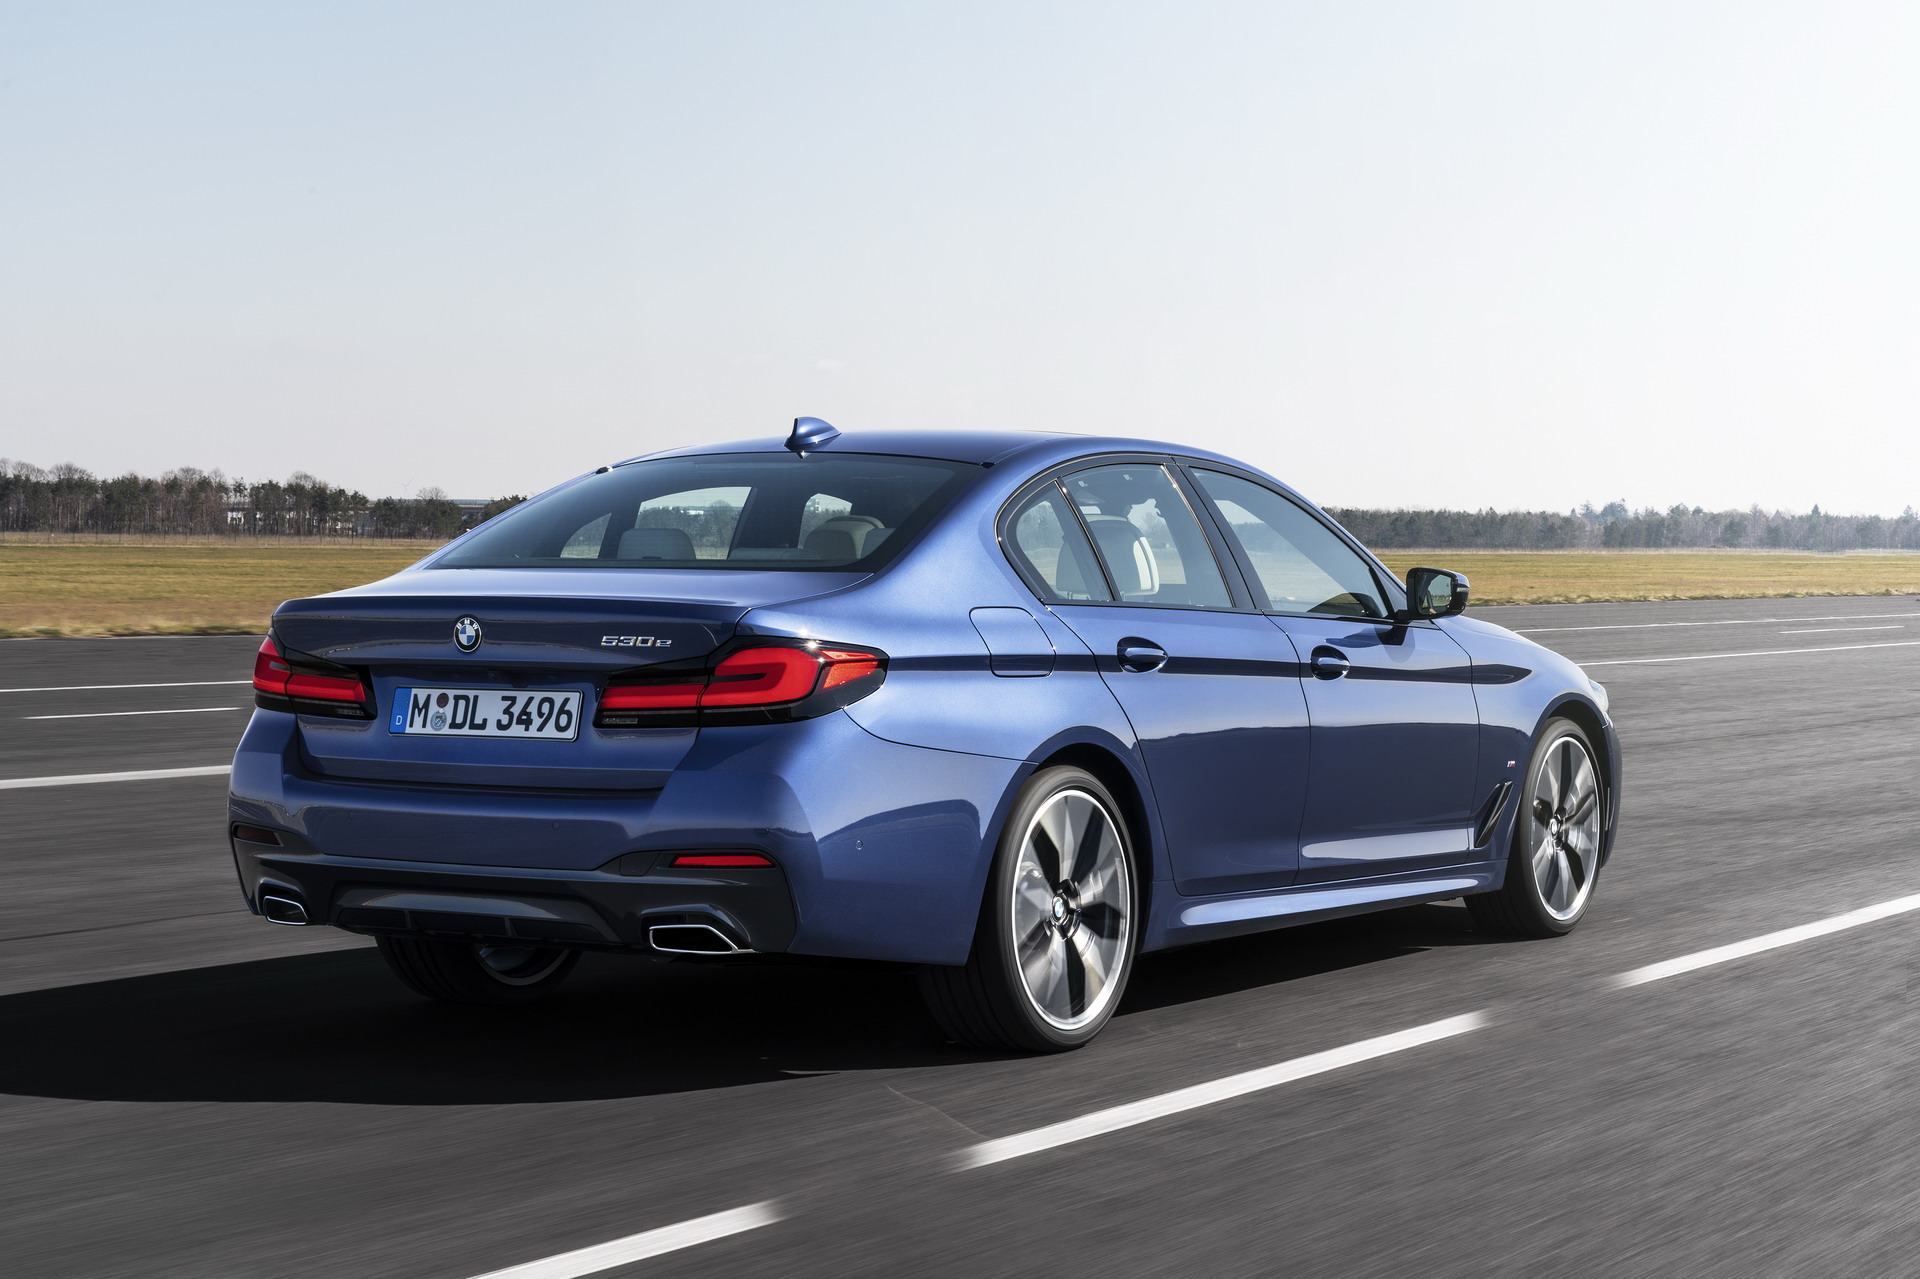 Fascineren weefgetouw verband BMW 5 Series to bring M Sport Edition limited-run models